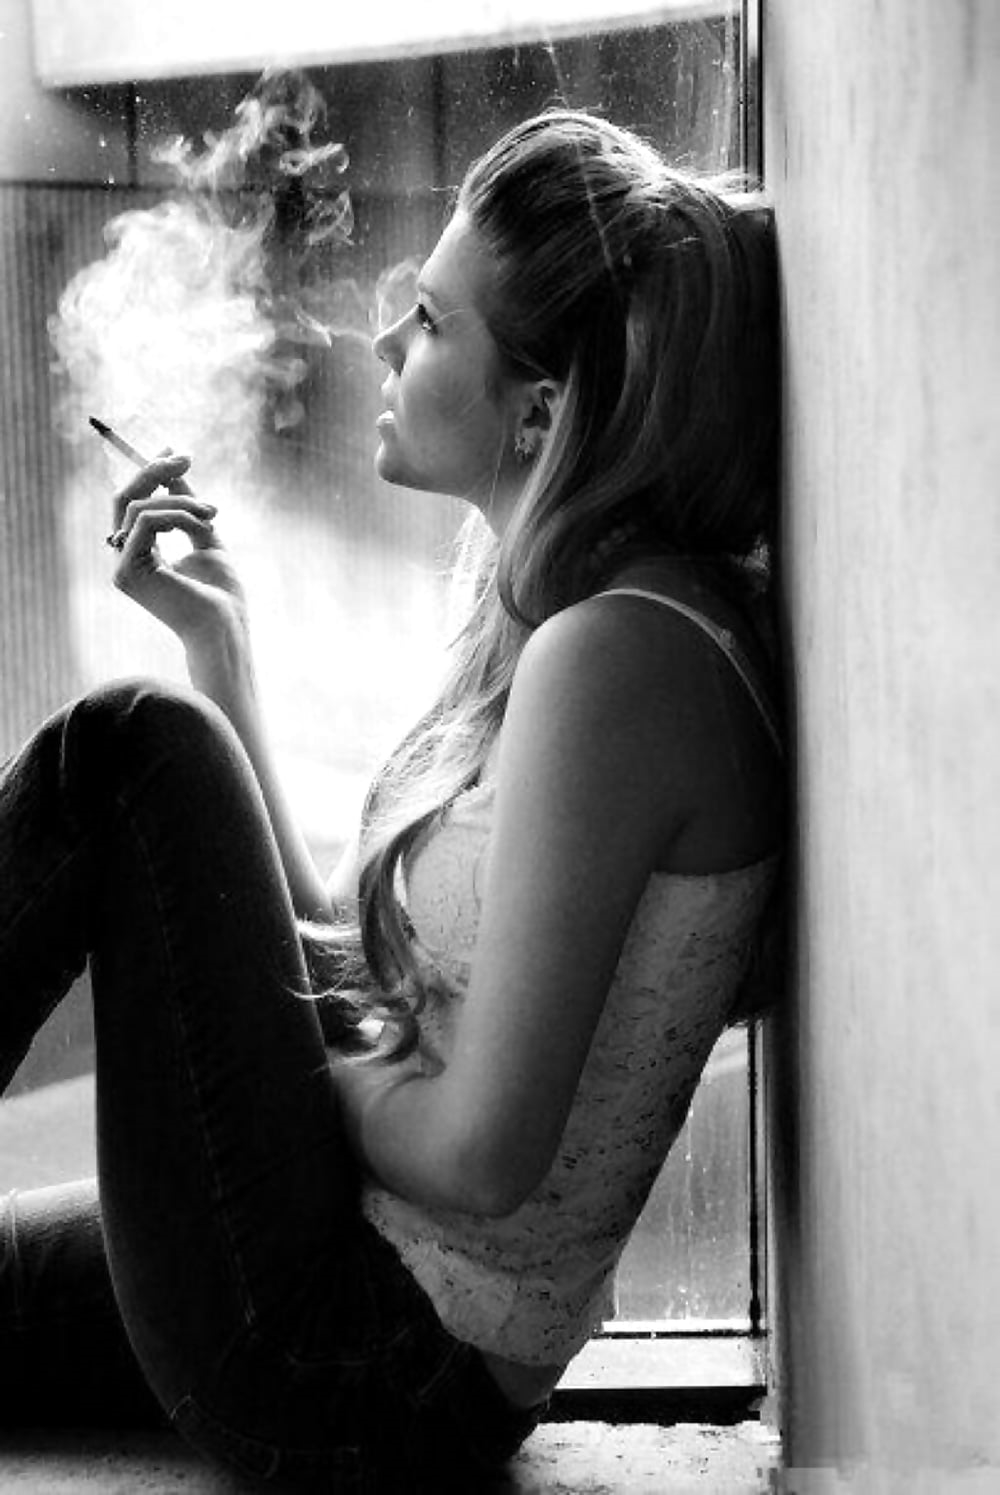 Пошло по комнате дымок. Курящие девушки. Девушка с сигаретой. Девушка с сигарой. Красивая курящая девушка.